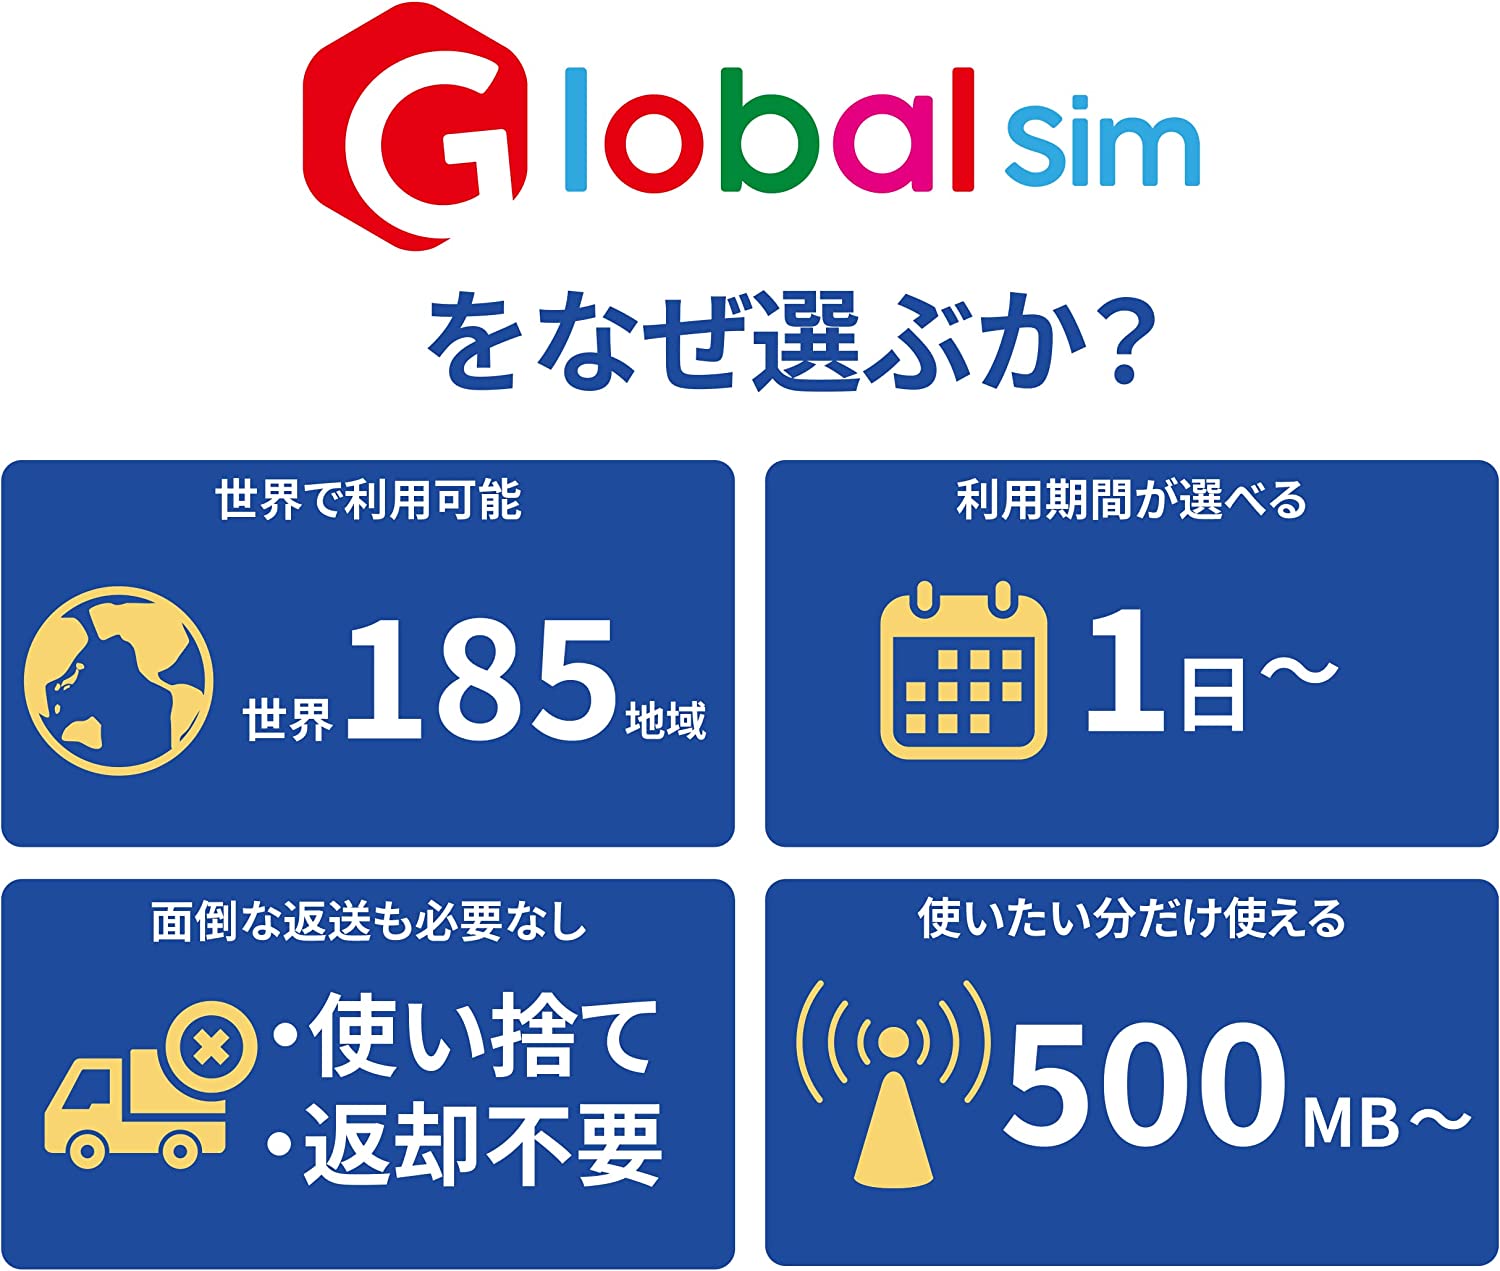 GLOBAL SIM ヨーロッパ 20日間 データ無制限 (1GB 日高速）（容量を使い切っても利用期間内は最大384kbps） データ通信専用 シムフリー端末のみ対応 追加費用なし・契約不要